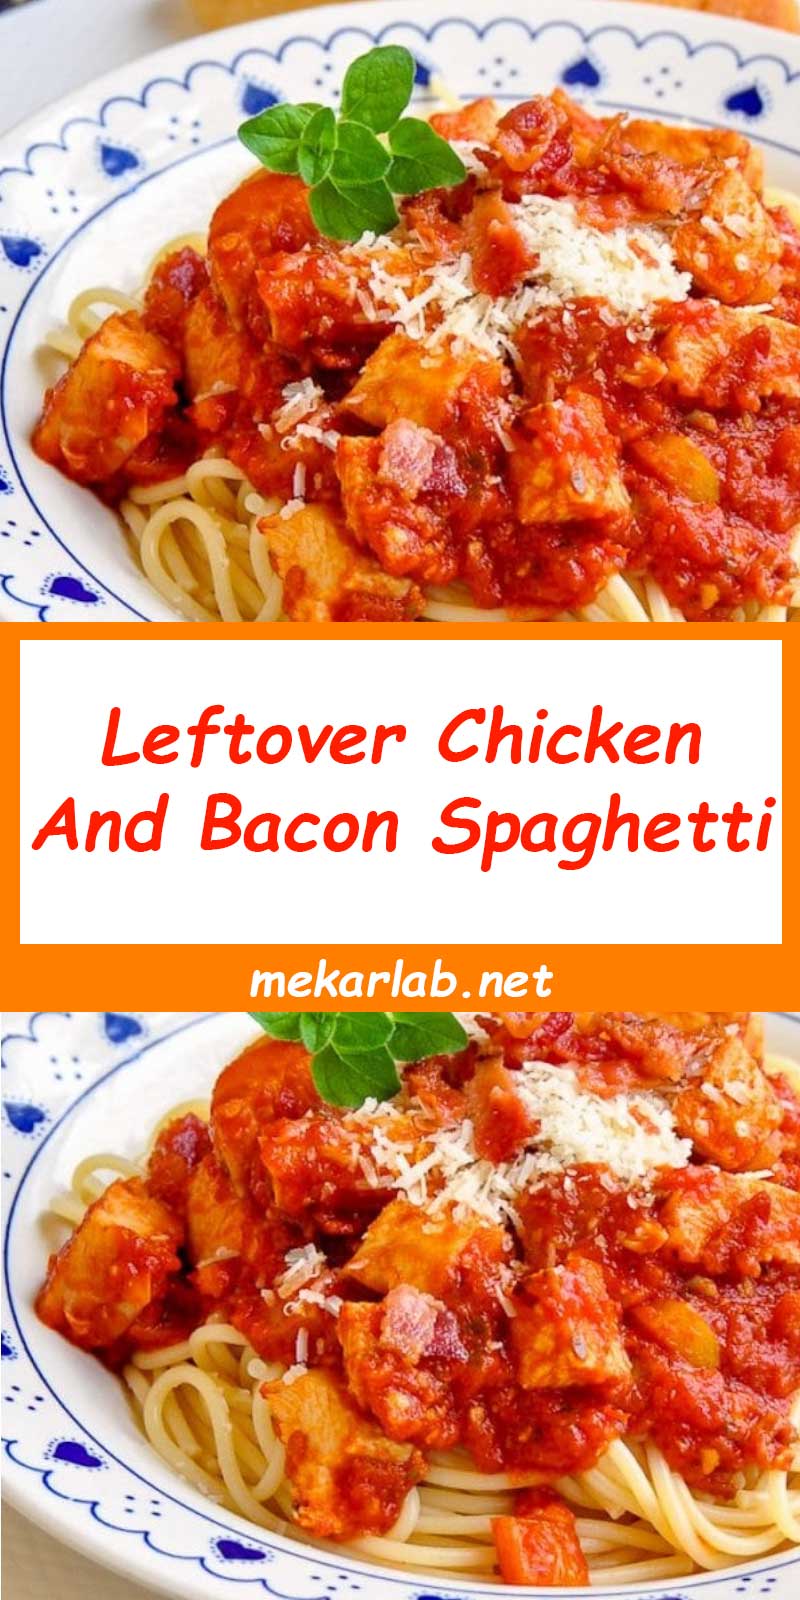 Leftover Chicken And Bacon Spaghetti